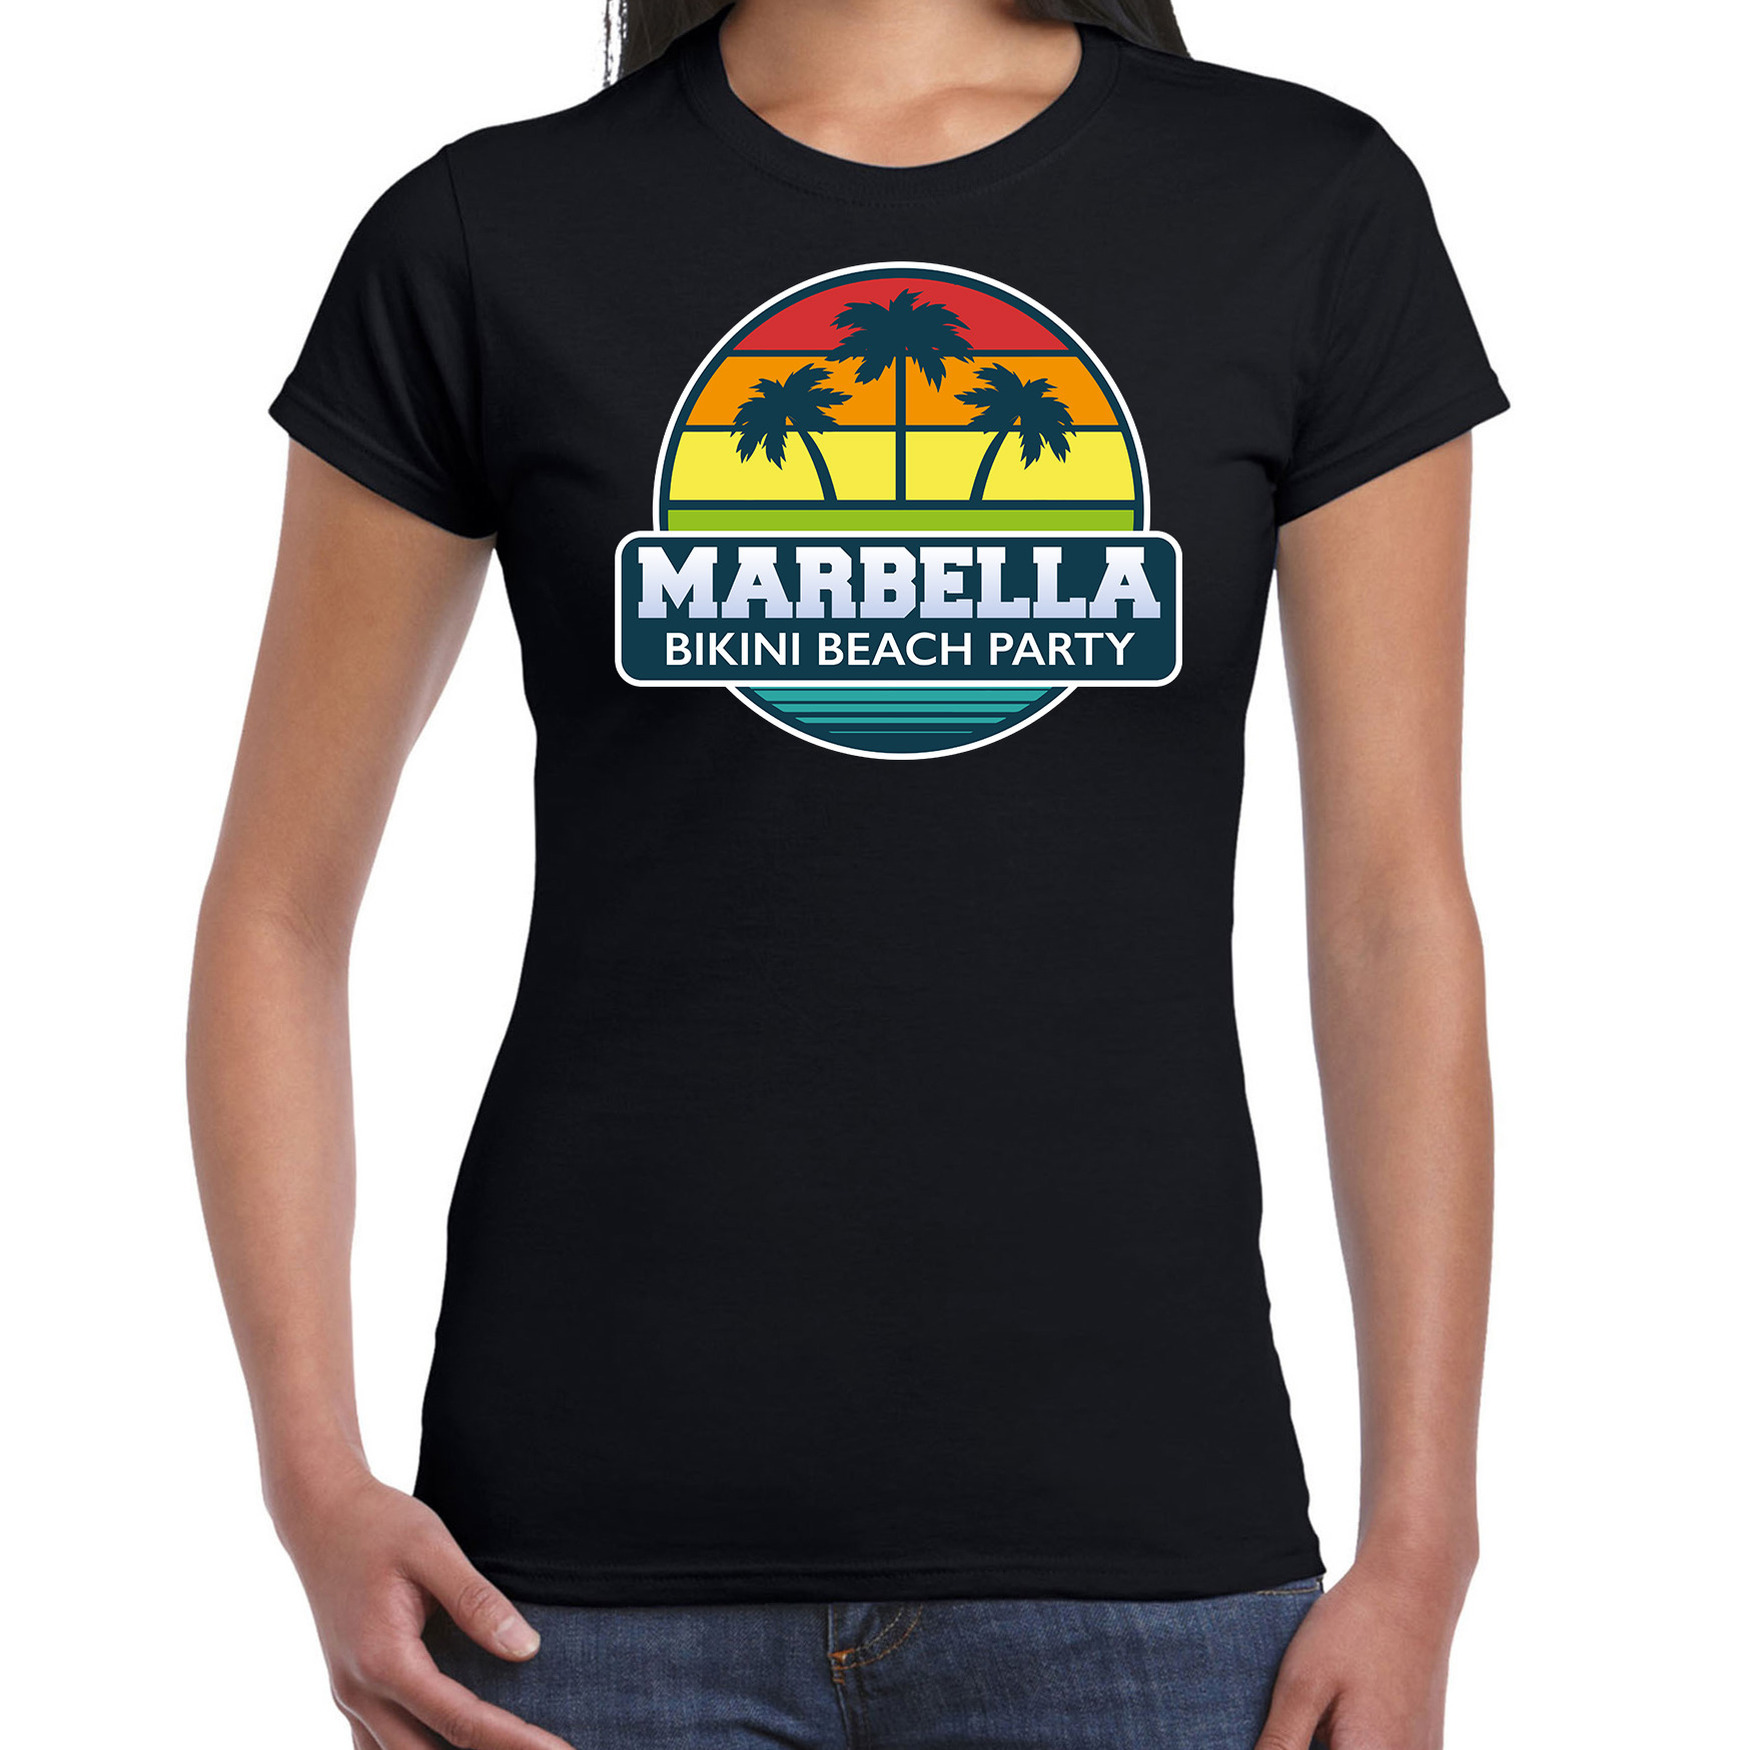 Marbella bikini beach party shirt beach-strandfeest vakantie outfit-kleding zwart voor dames